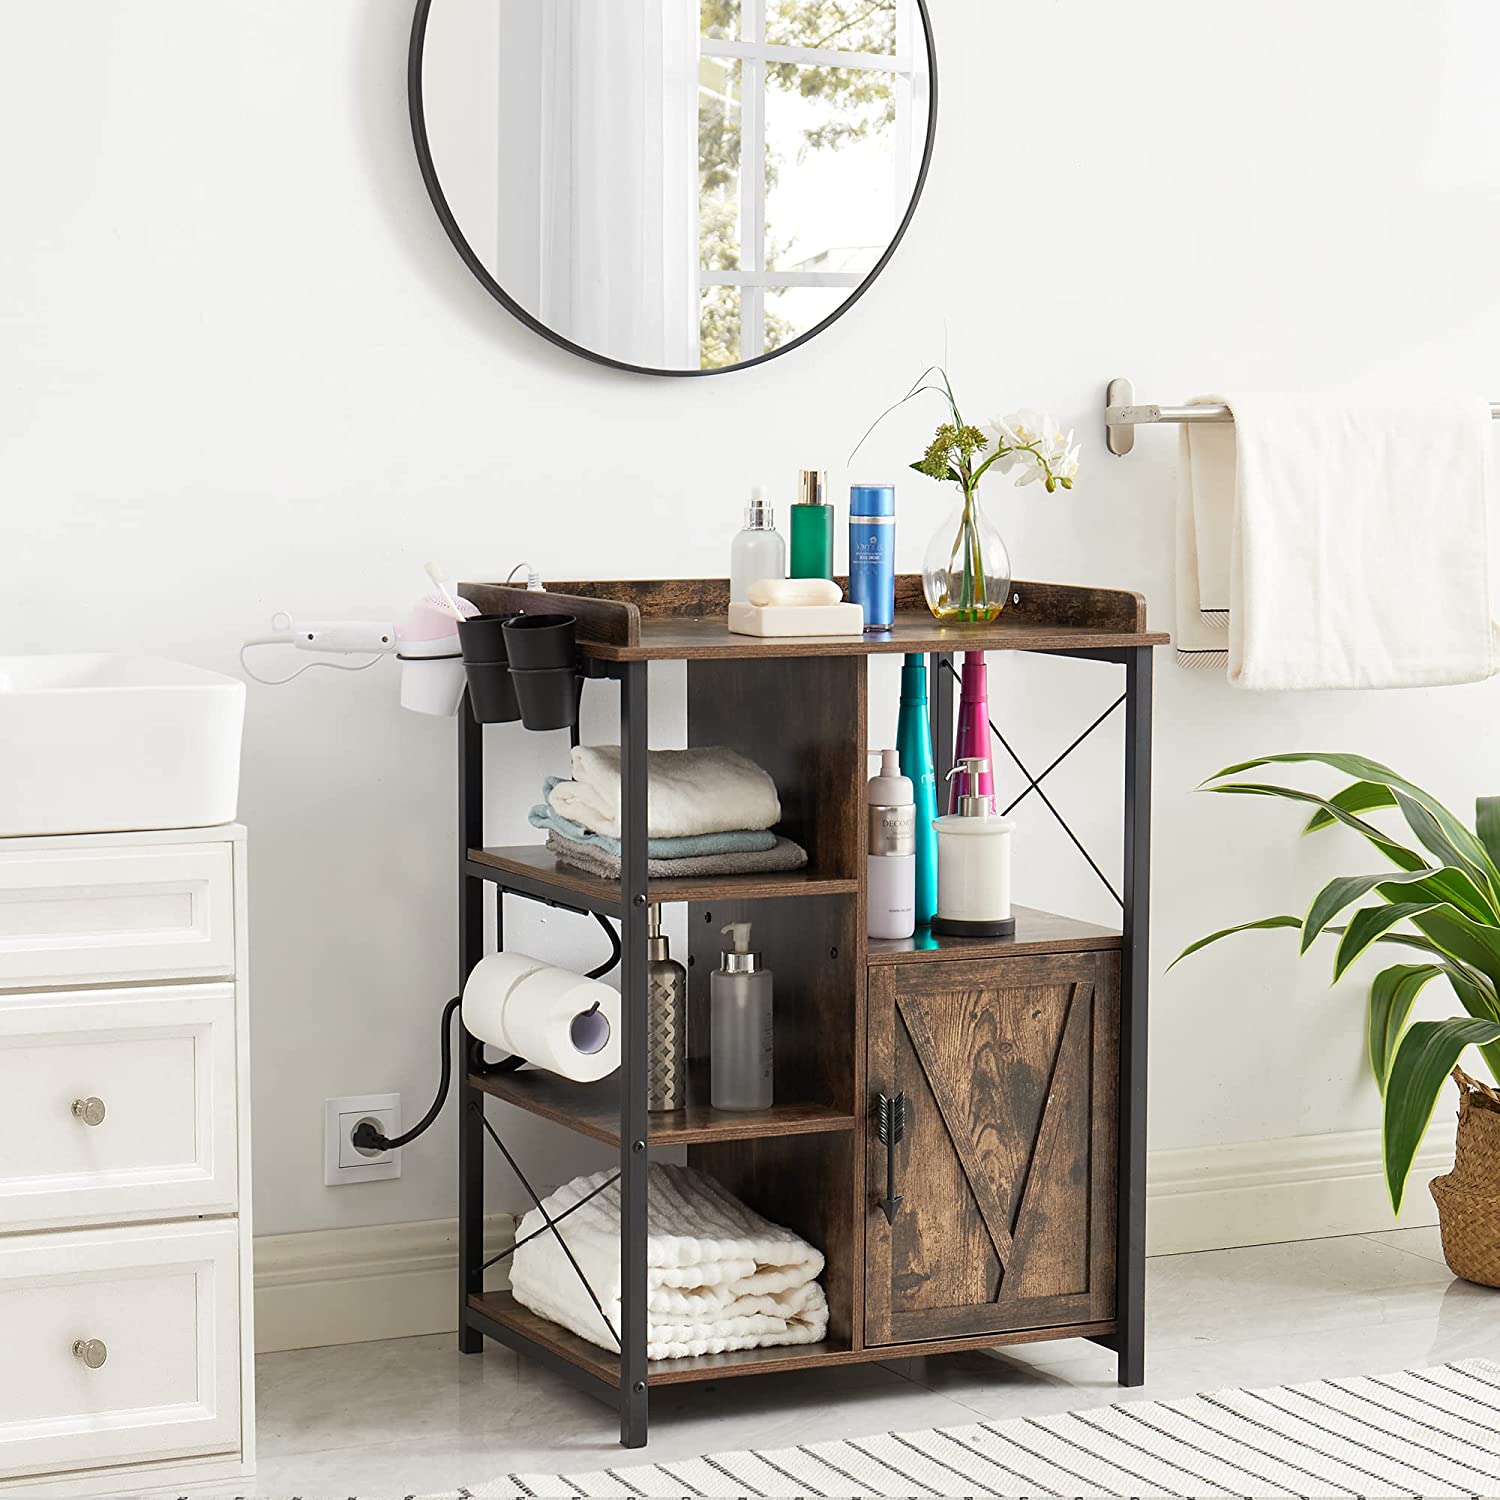 VECELO Floor Cabinet, Freestanding Storage Organizer with 2 Outlets & 3 Shelves for Bathroom, Kitchen,Hallway